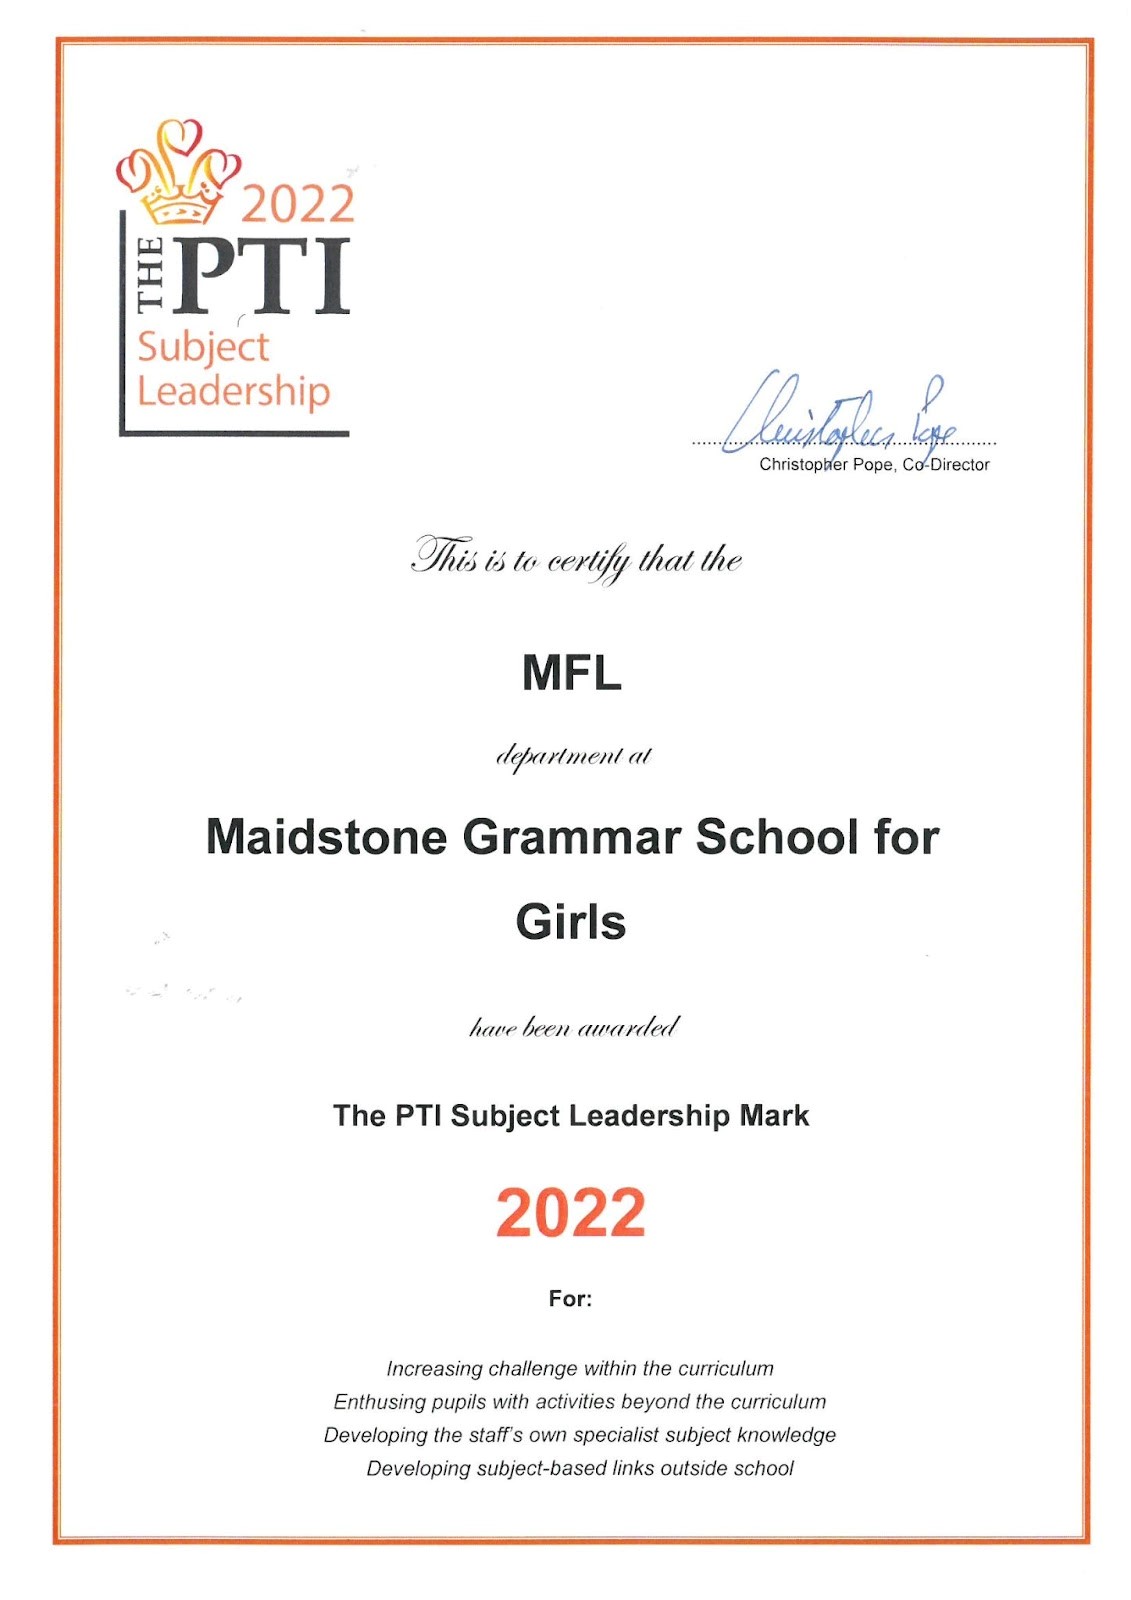 The PTI award our MFL Department their Subject Leadership Mark